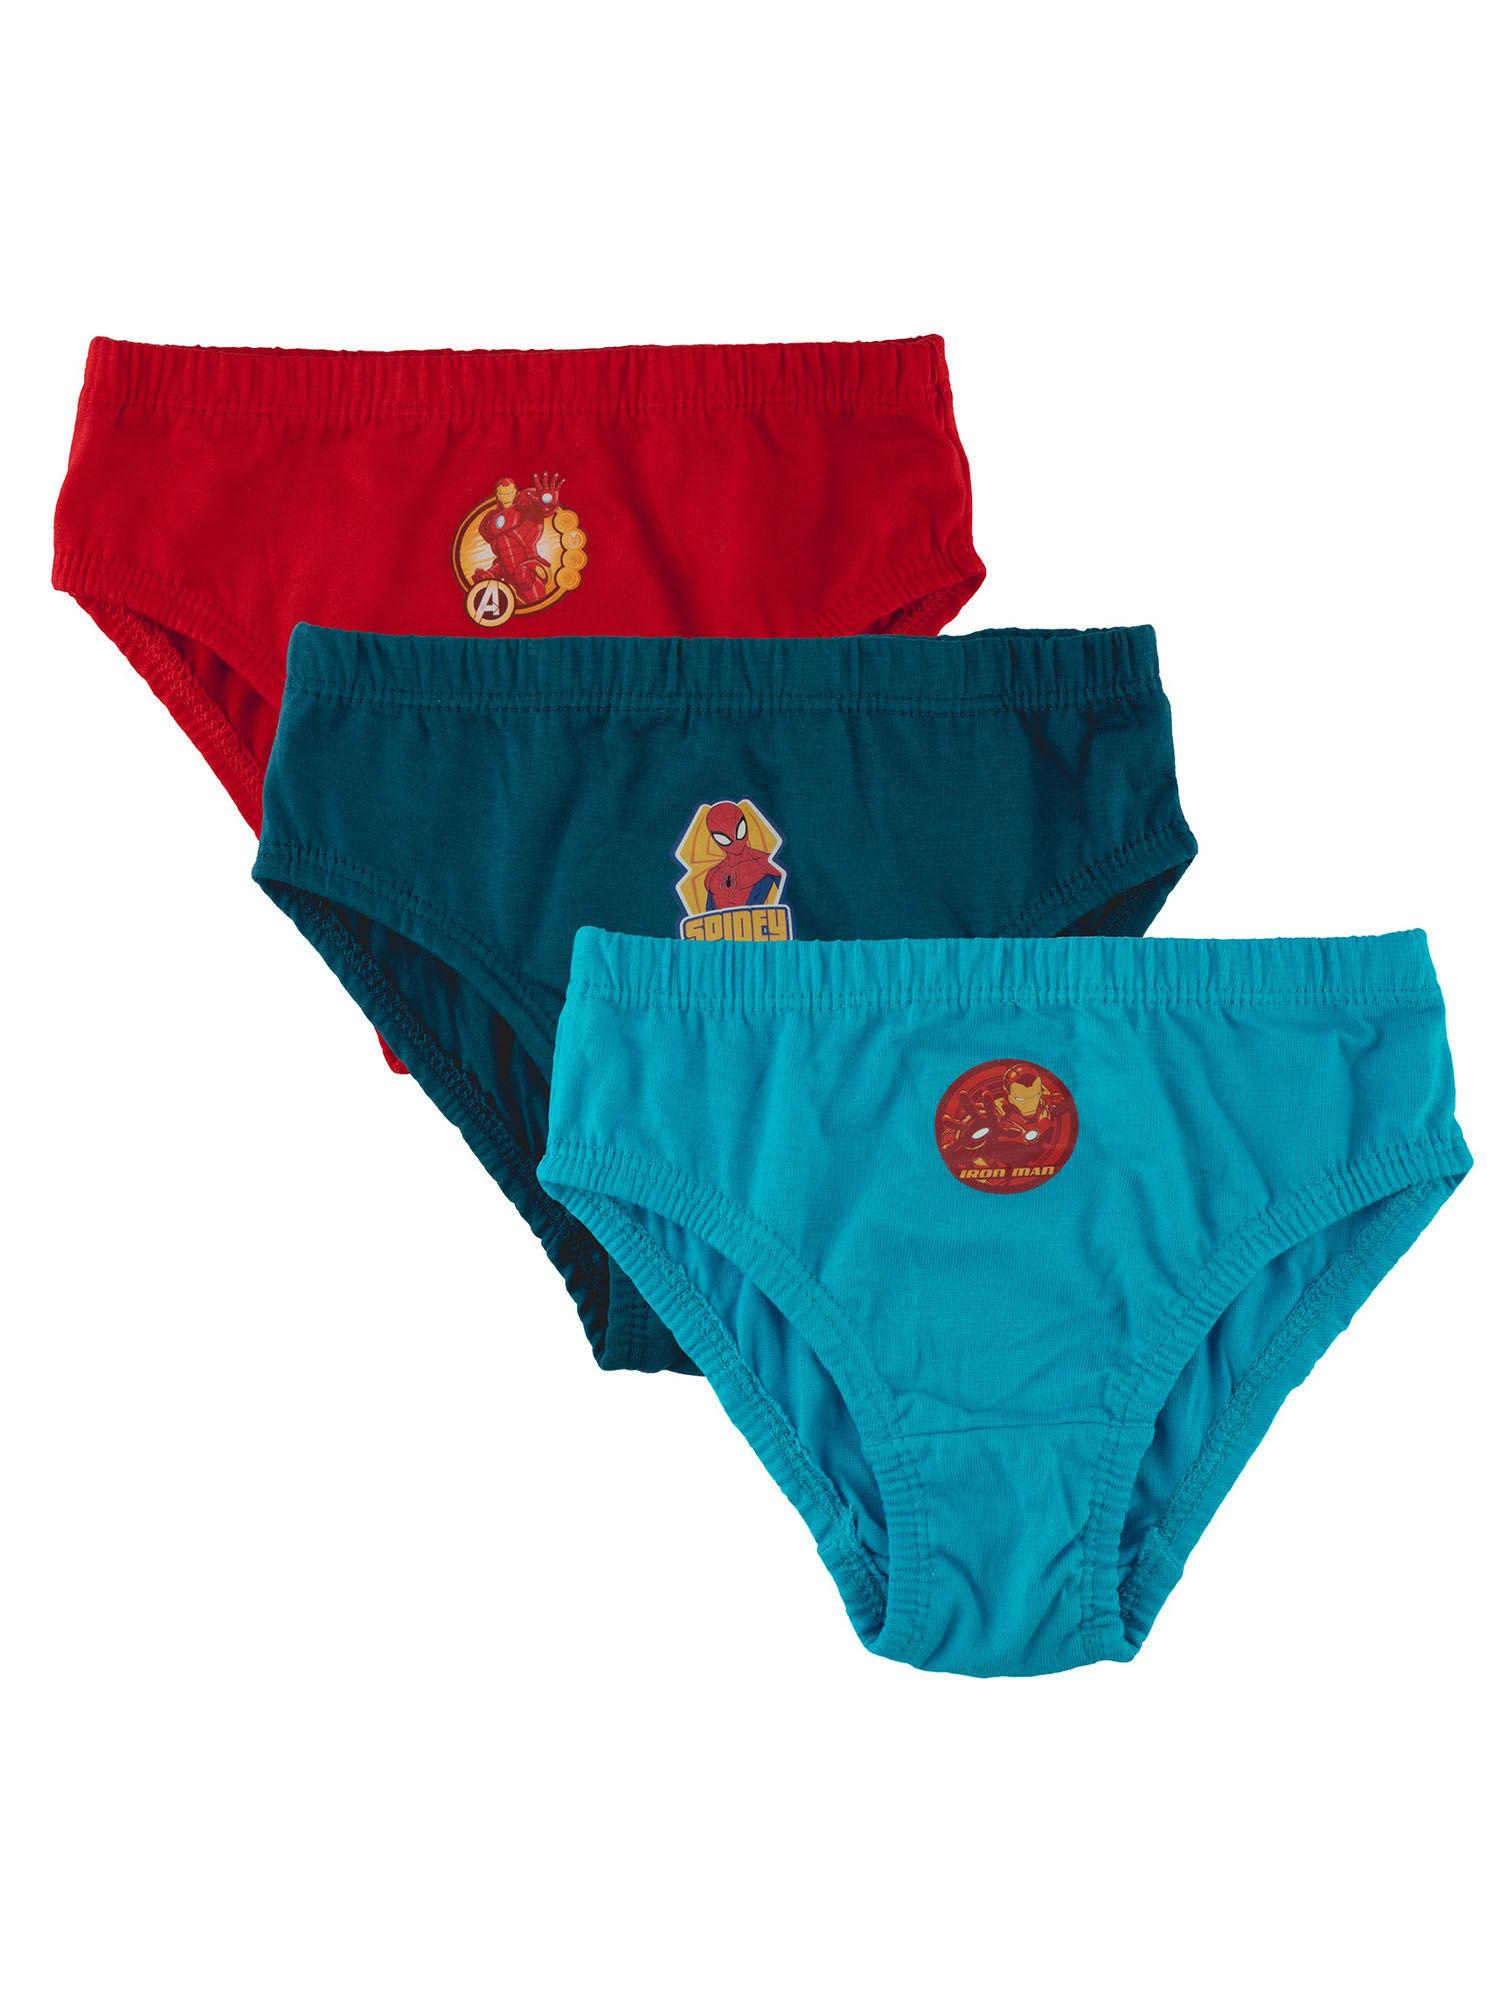 boys iron man printed brief underwear innerwear multicolor (pack of 3)